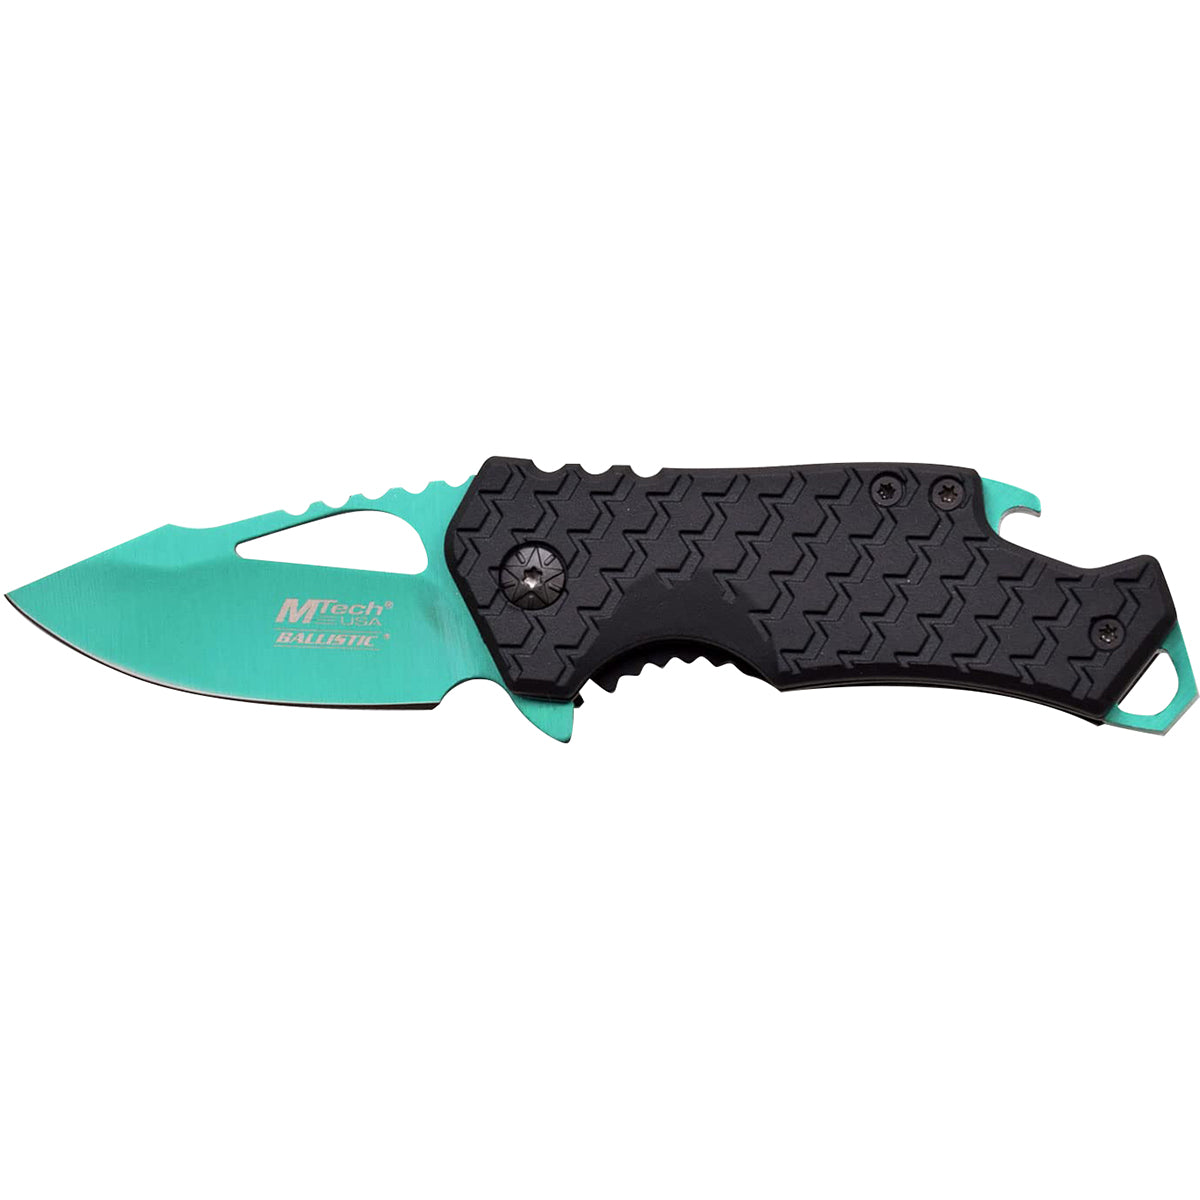 MTech USA Framelock Spring Assisted Folding Knife, 2.25" Green Blade, MT-A882GN M-Tech